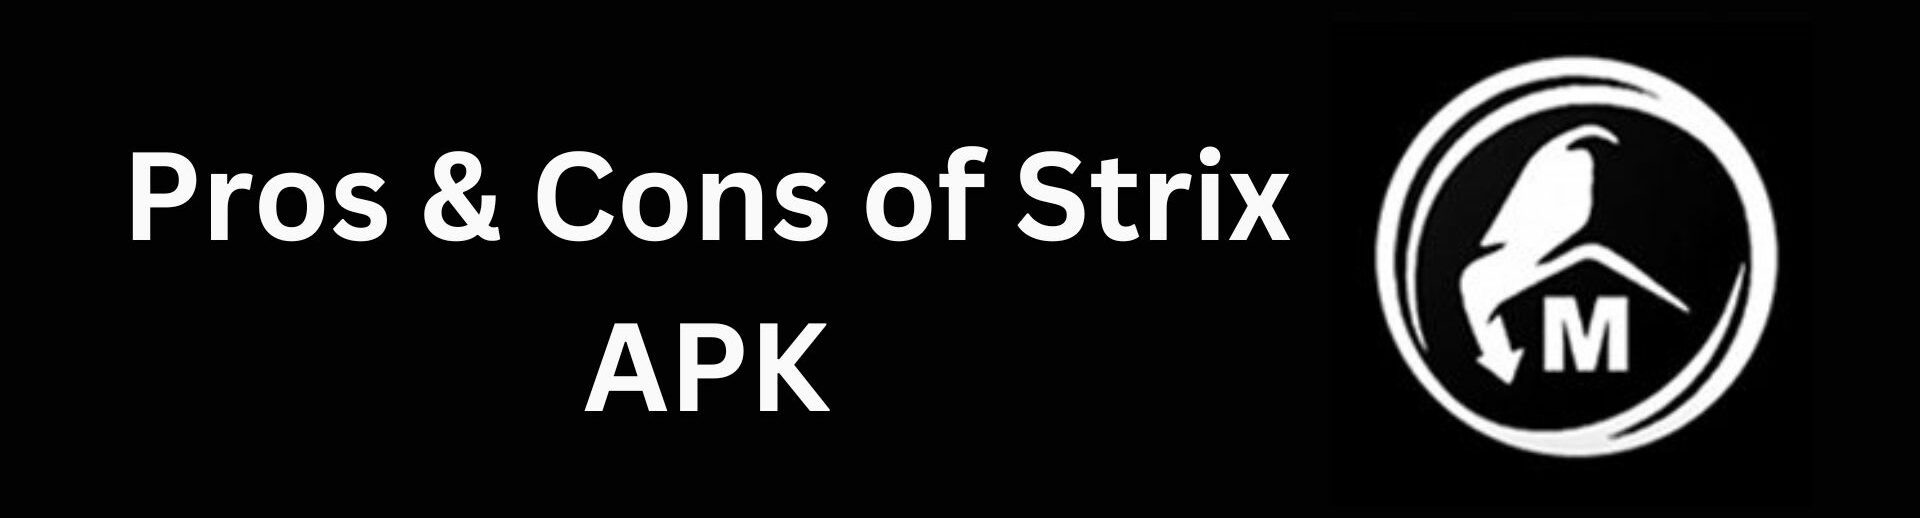 Pros & Cons of Strix APK